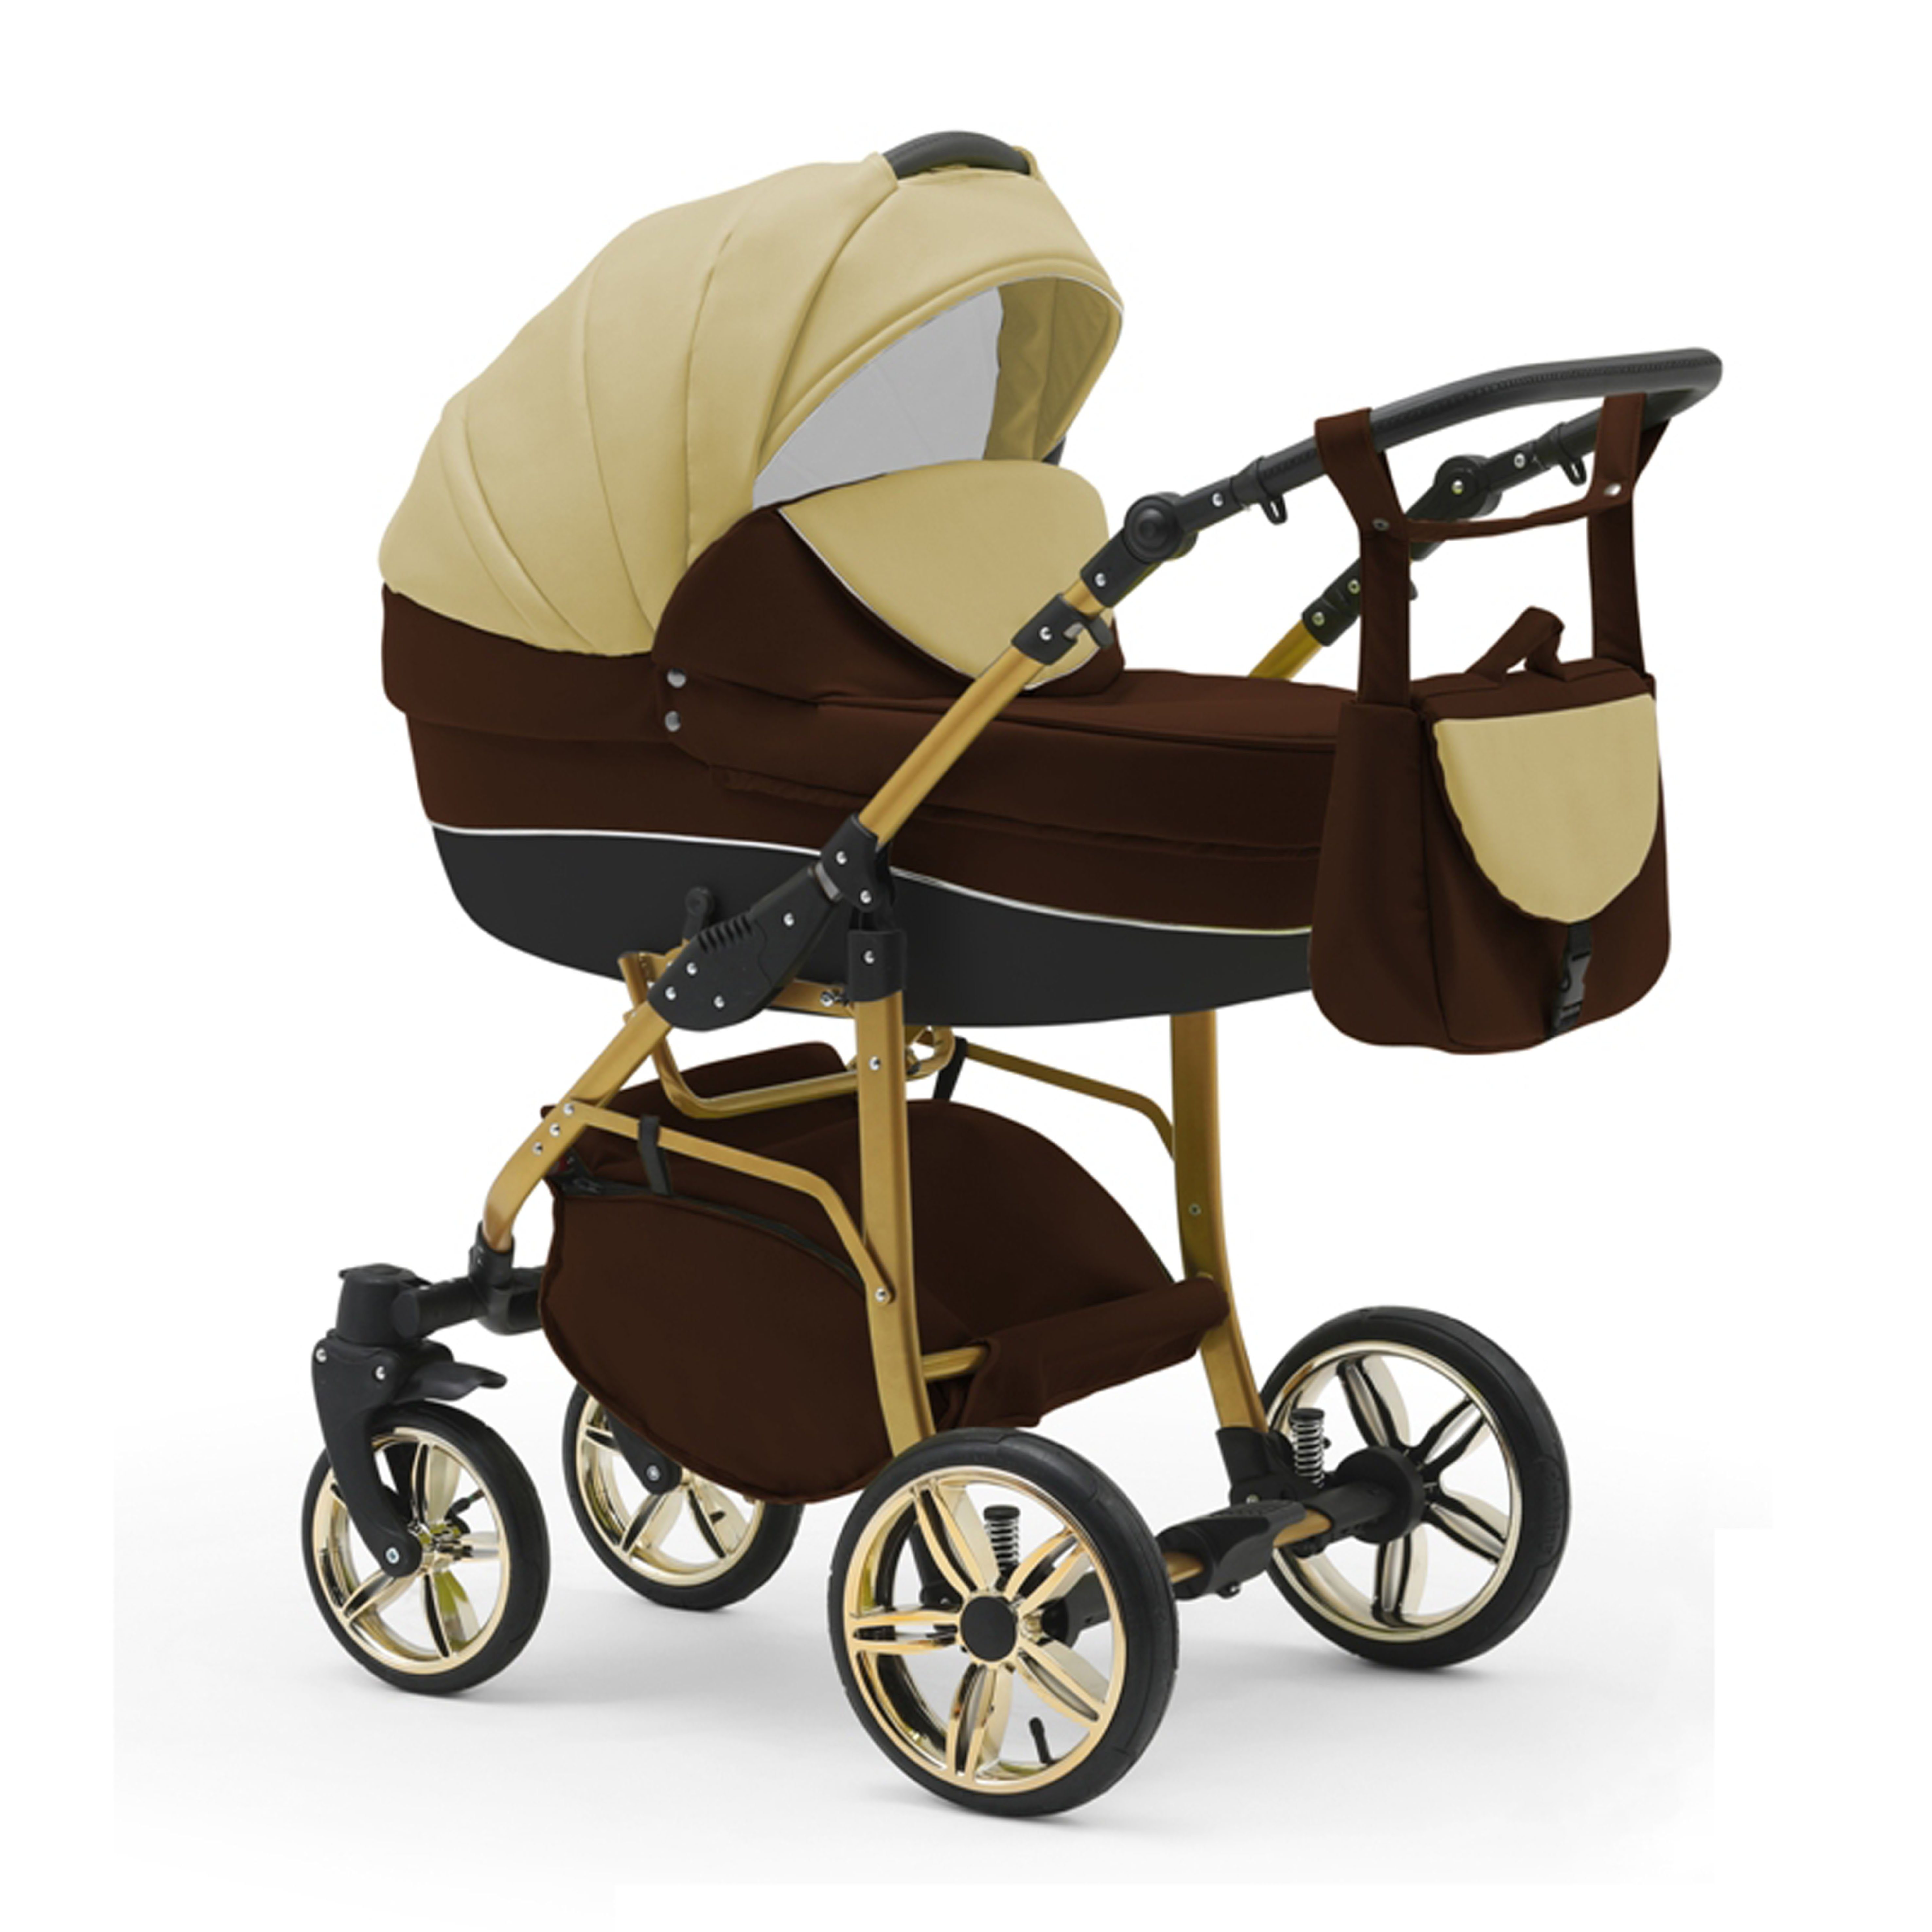 Kinderwagen-Set babies-on-wheels in 46 - 2 Farben 13 Braun-Beige Gold - 1 Cosmo Kombi-Kinderwagen Teile in